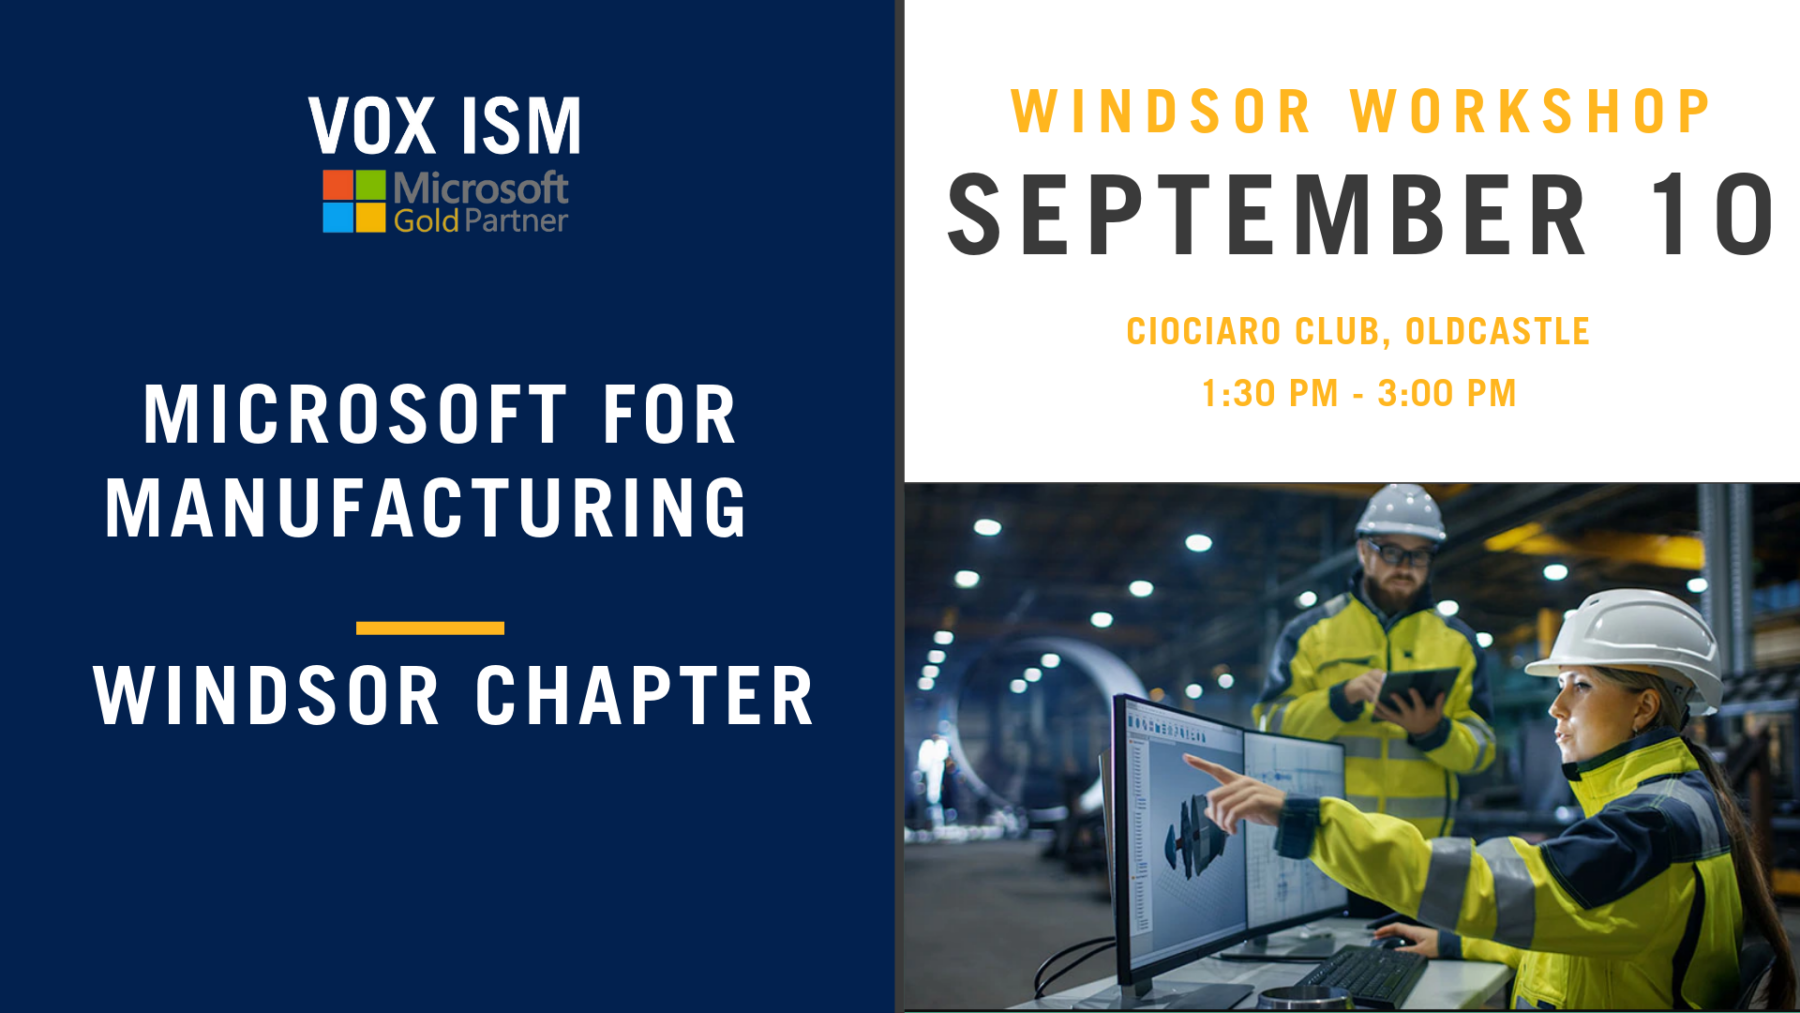 Microsoft for Manufacturing - Windsor Chapter - September 10 - VOX ISM